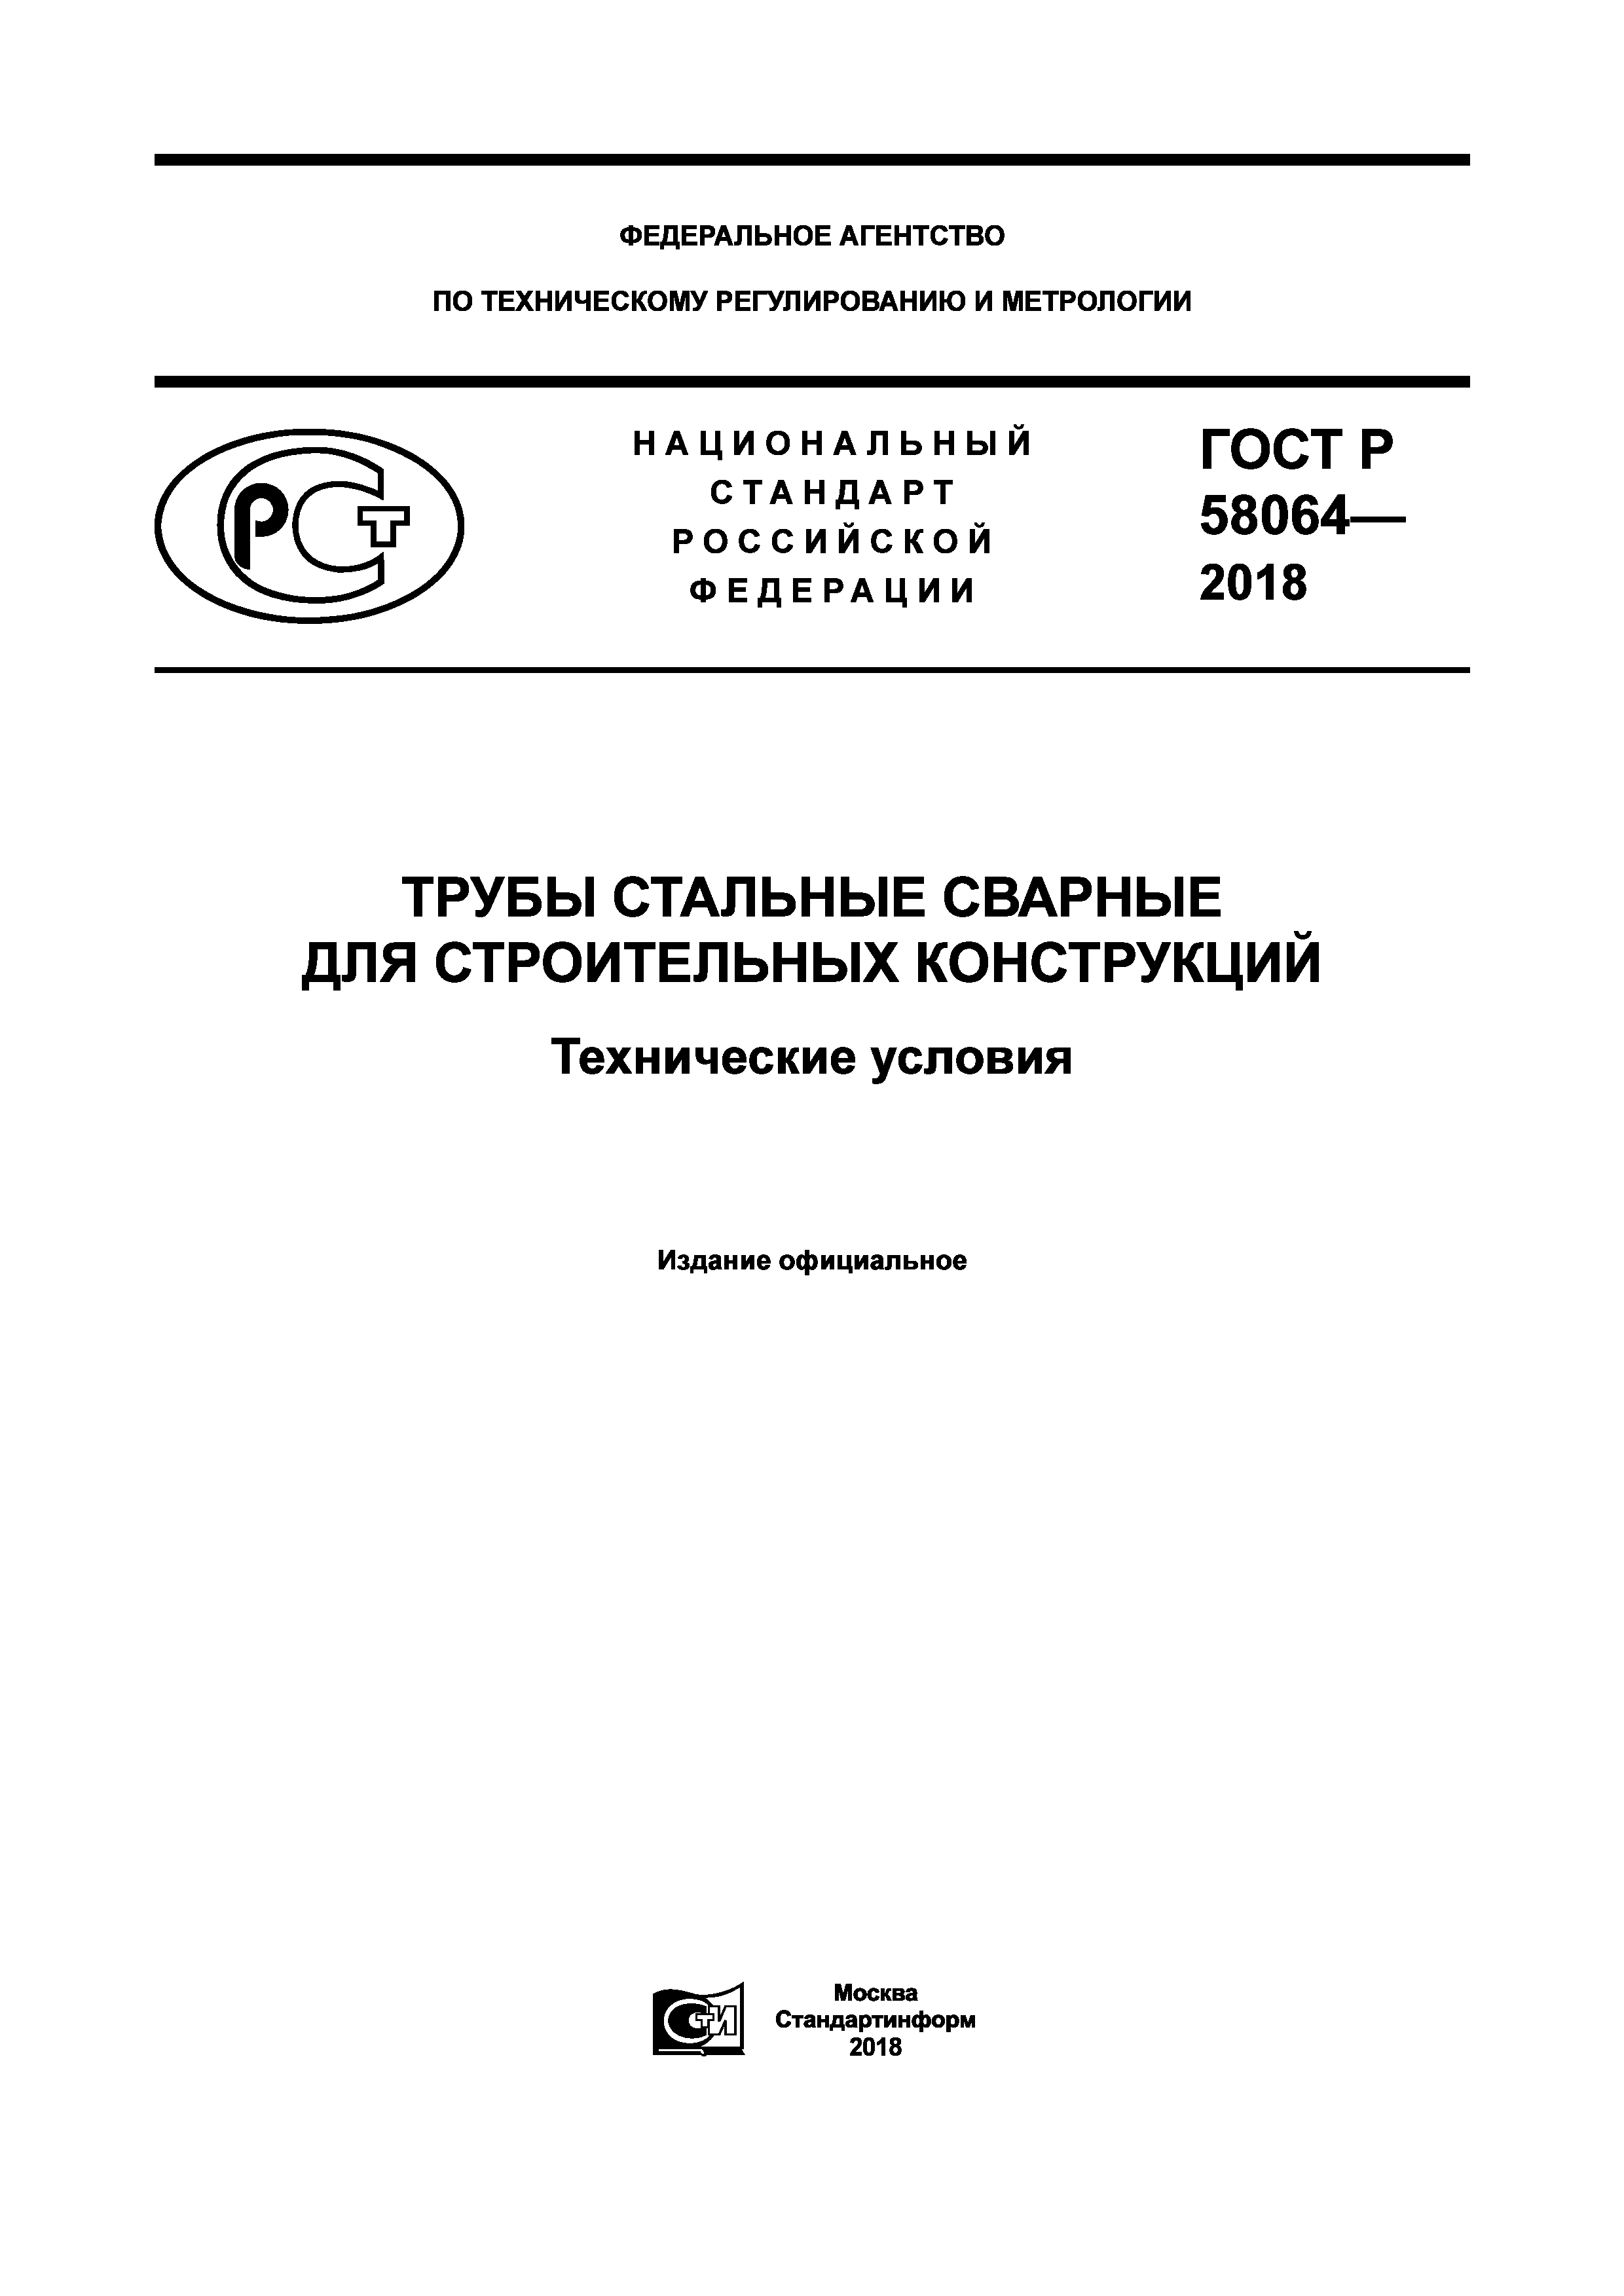 ГОСТ Р 58064-2018